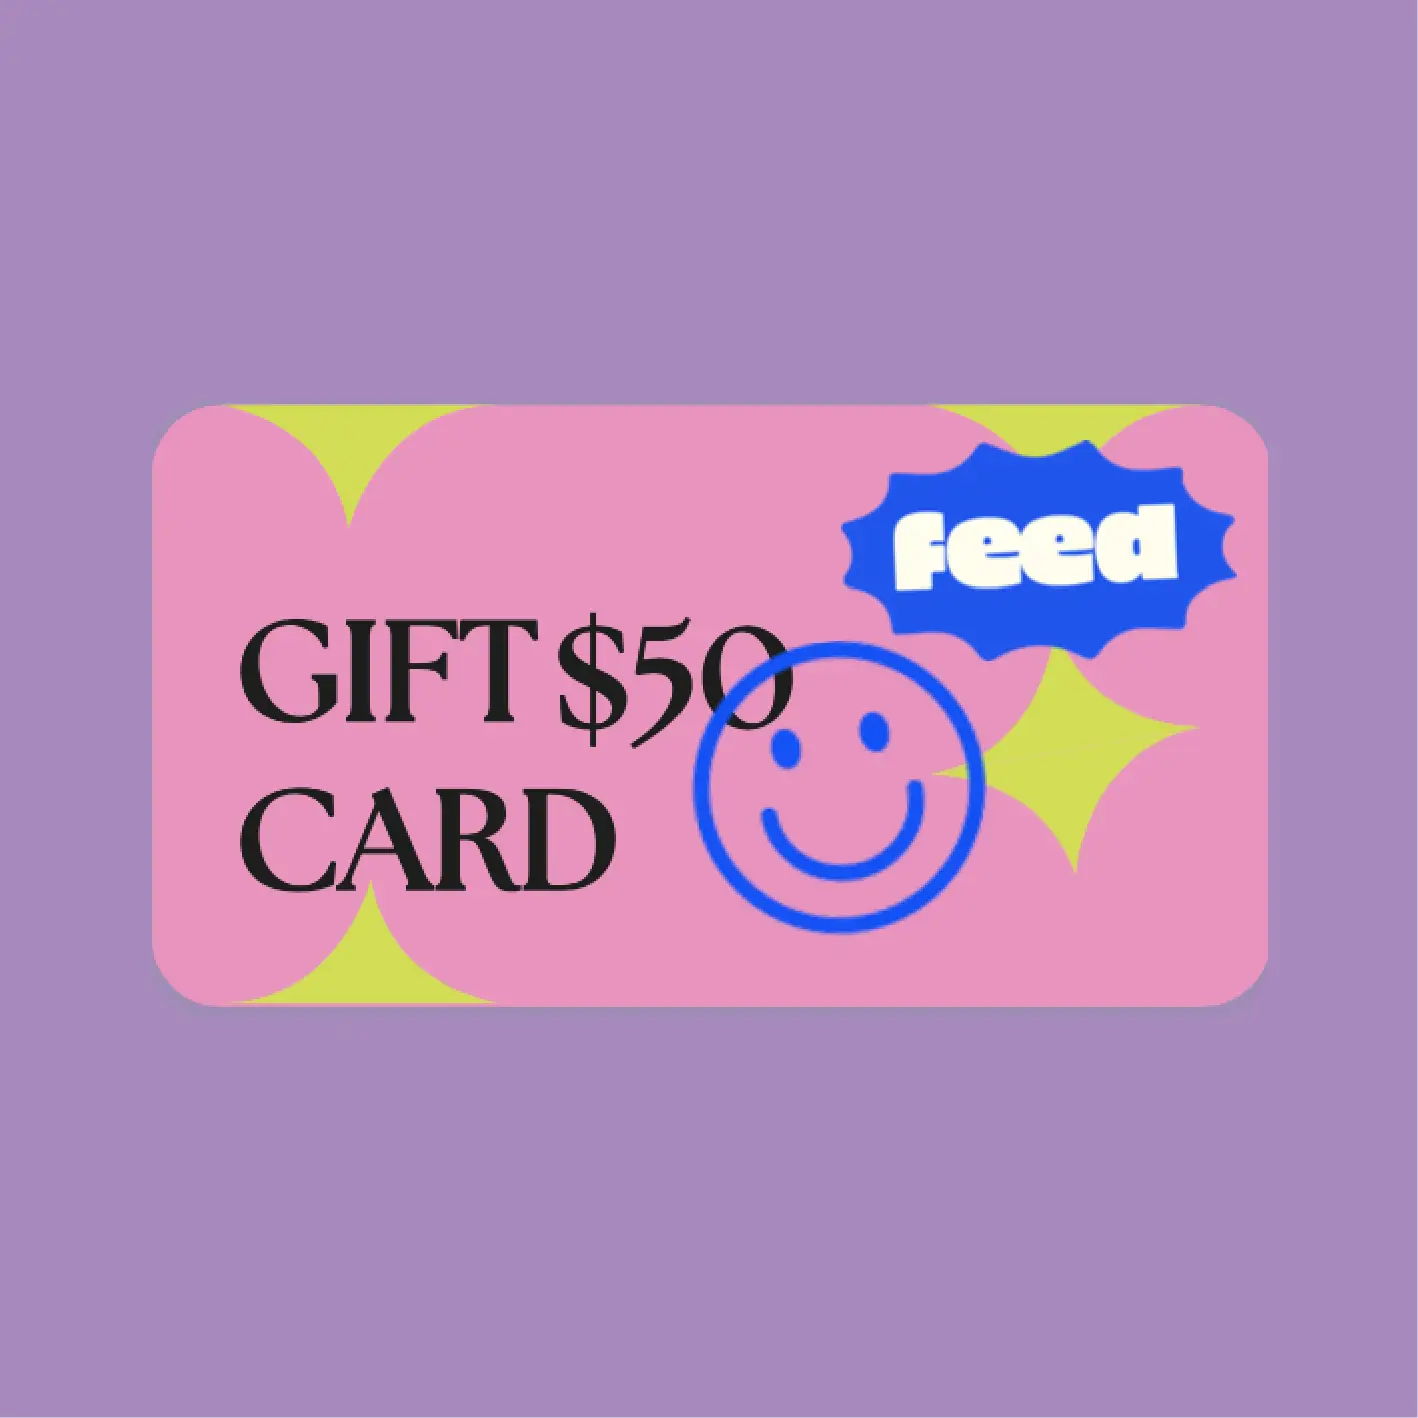 Feed $50 Gift Card